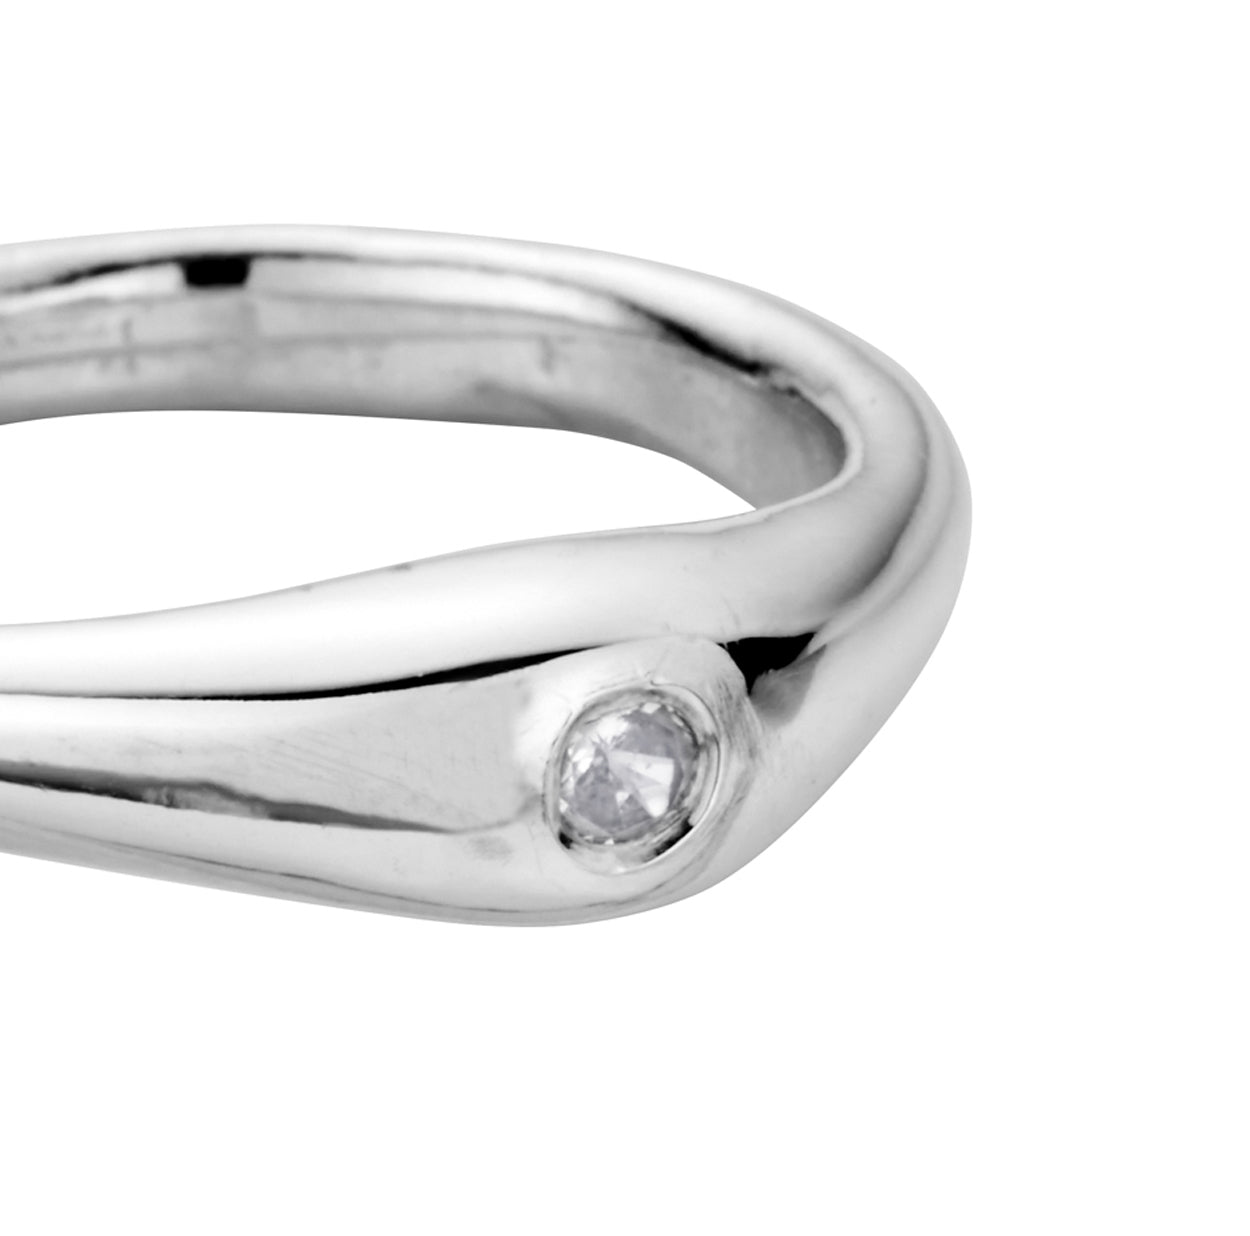 Silver Diamond Stack Ring